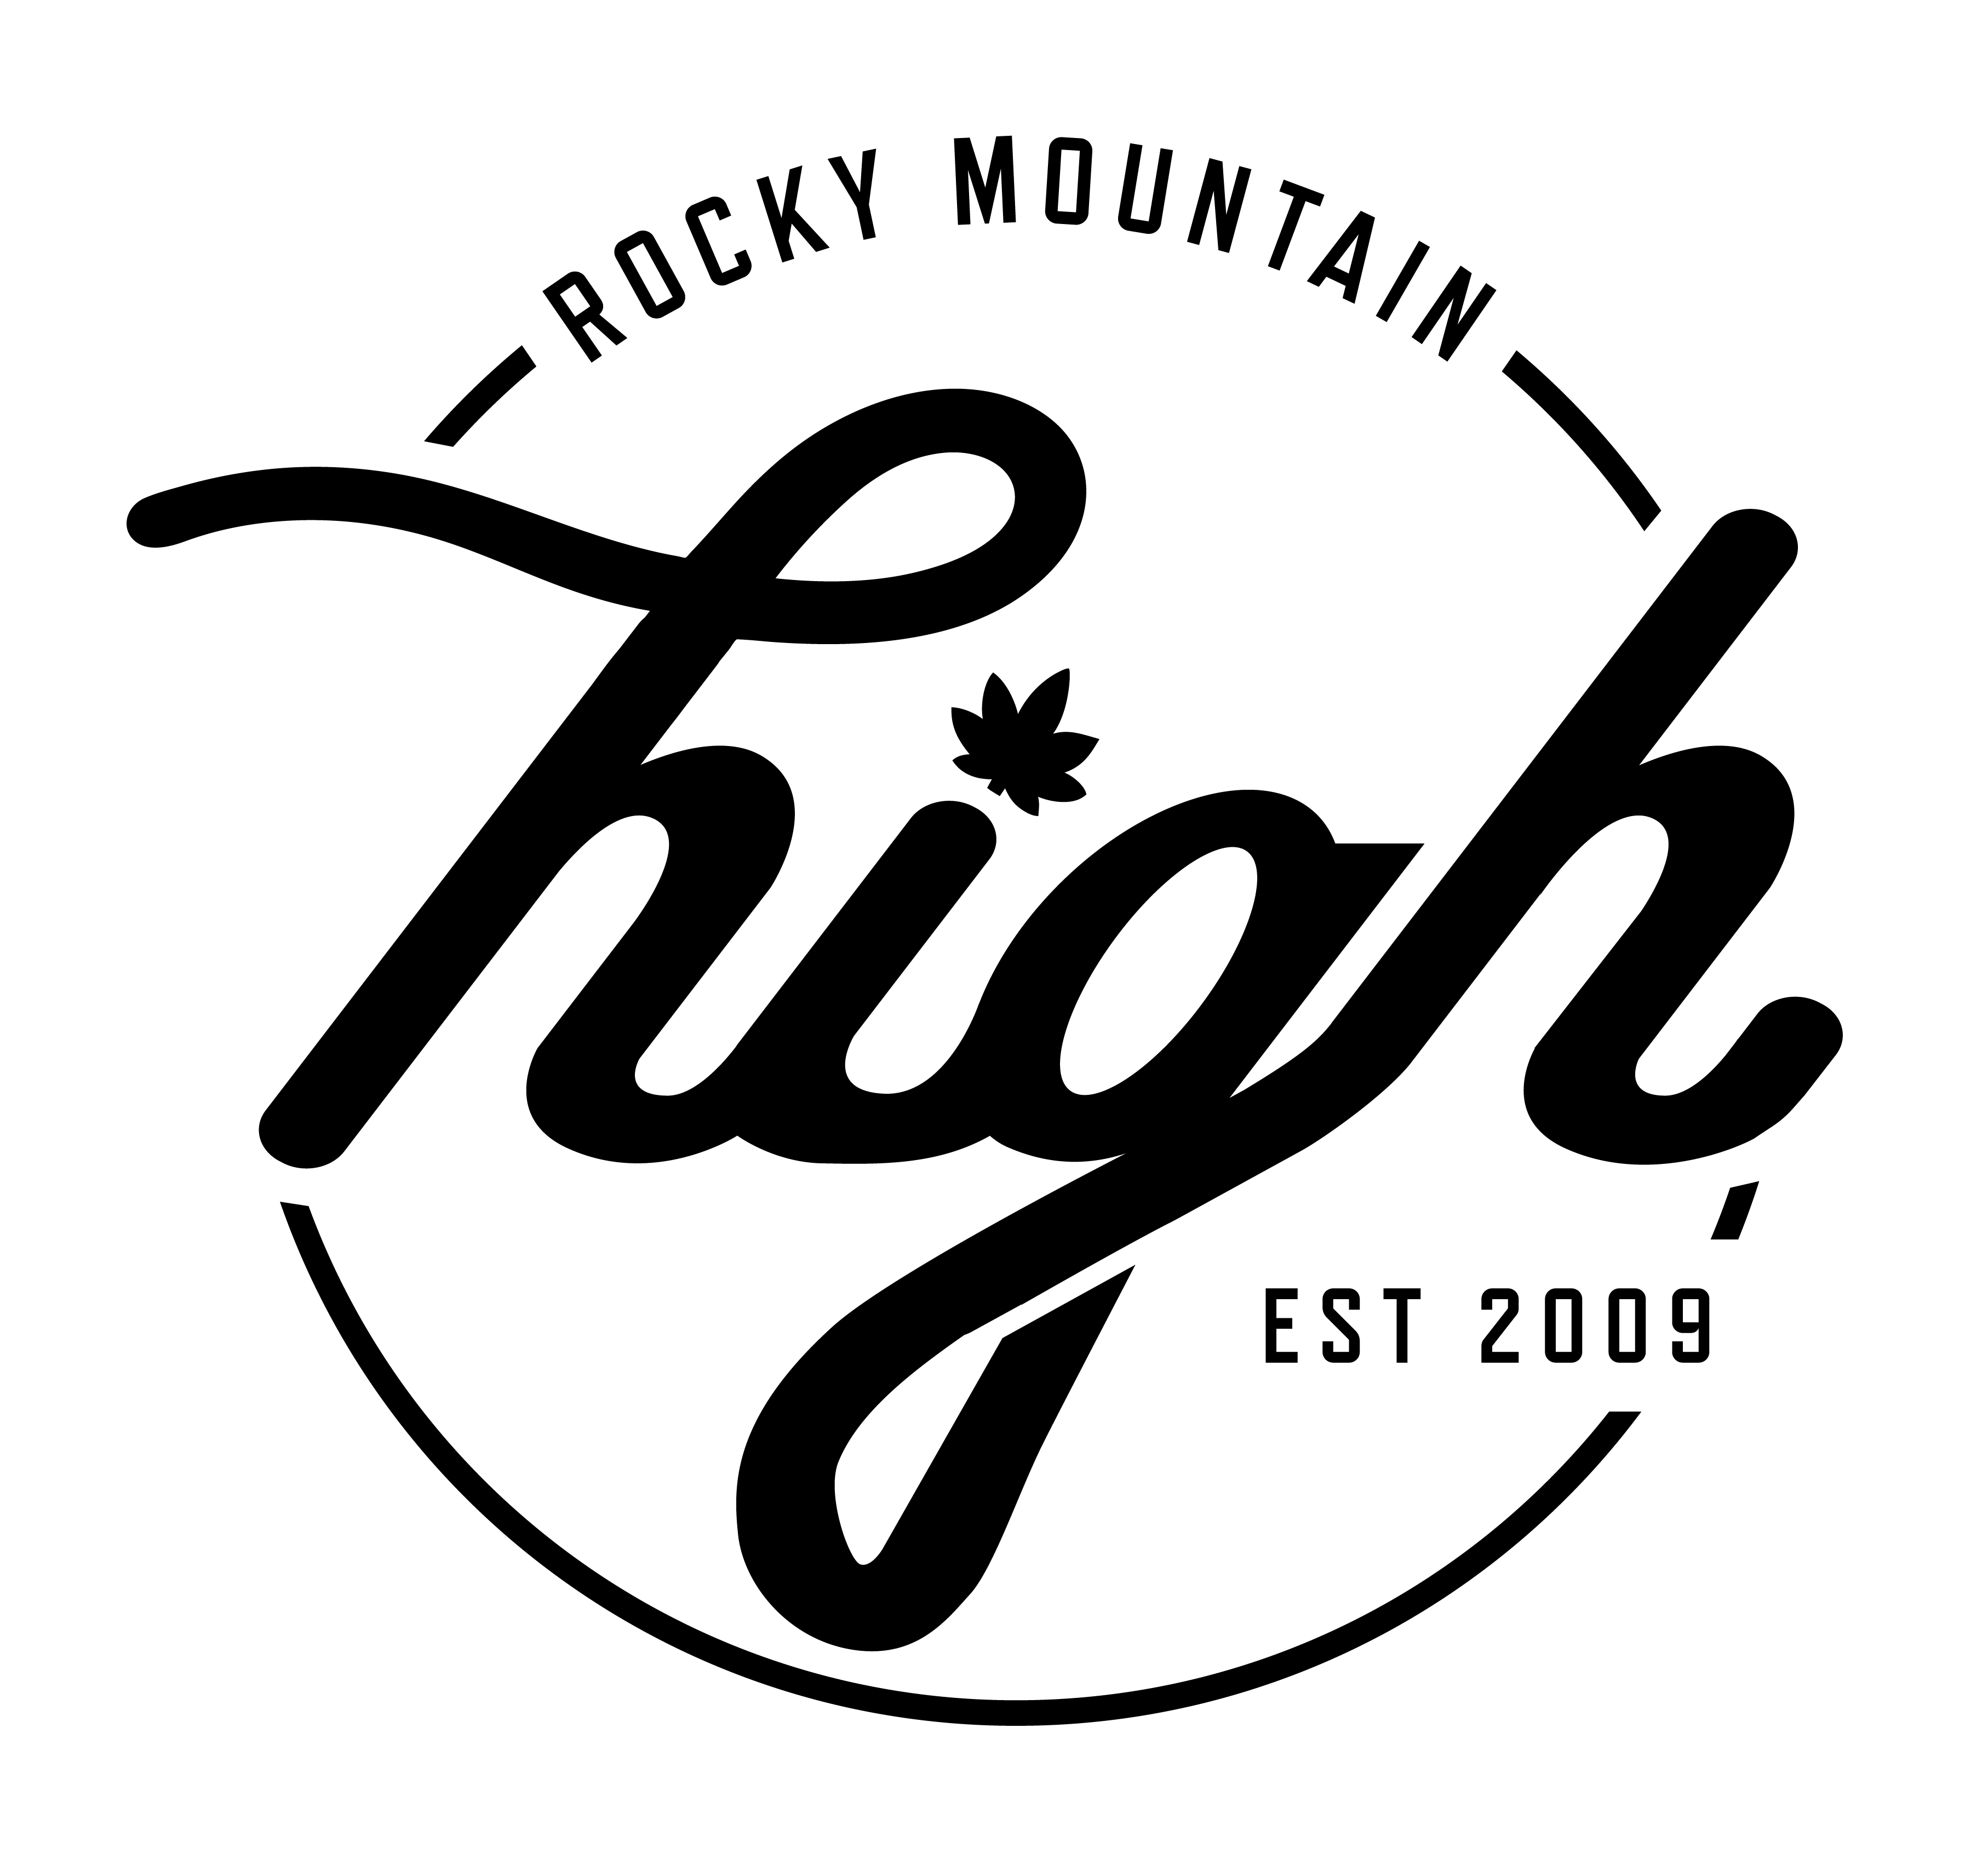 gear-rocky-mountain-high-new-logo-apparel